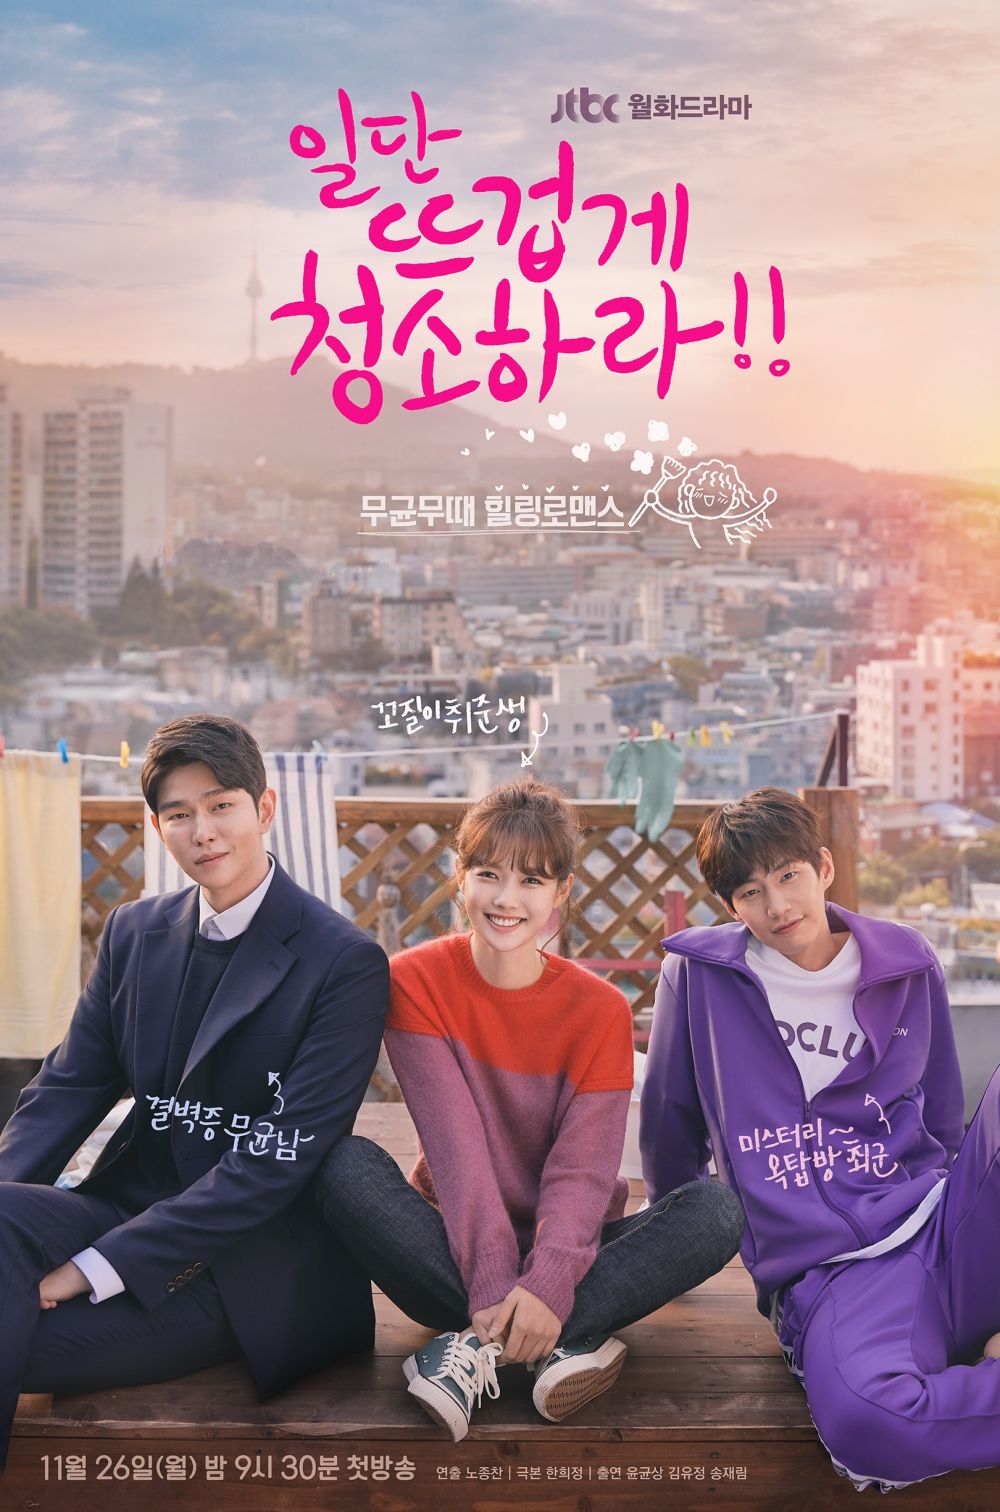 10 Drama Korea komedi romantis terbaik 2019, bikin gereget